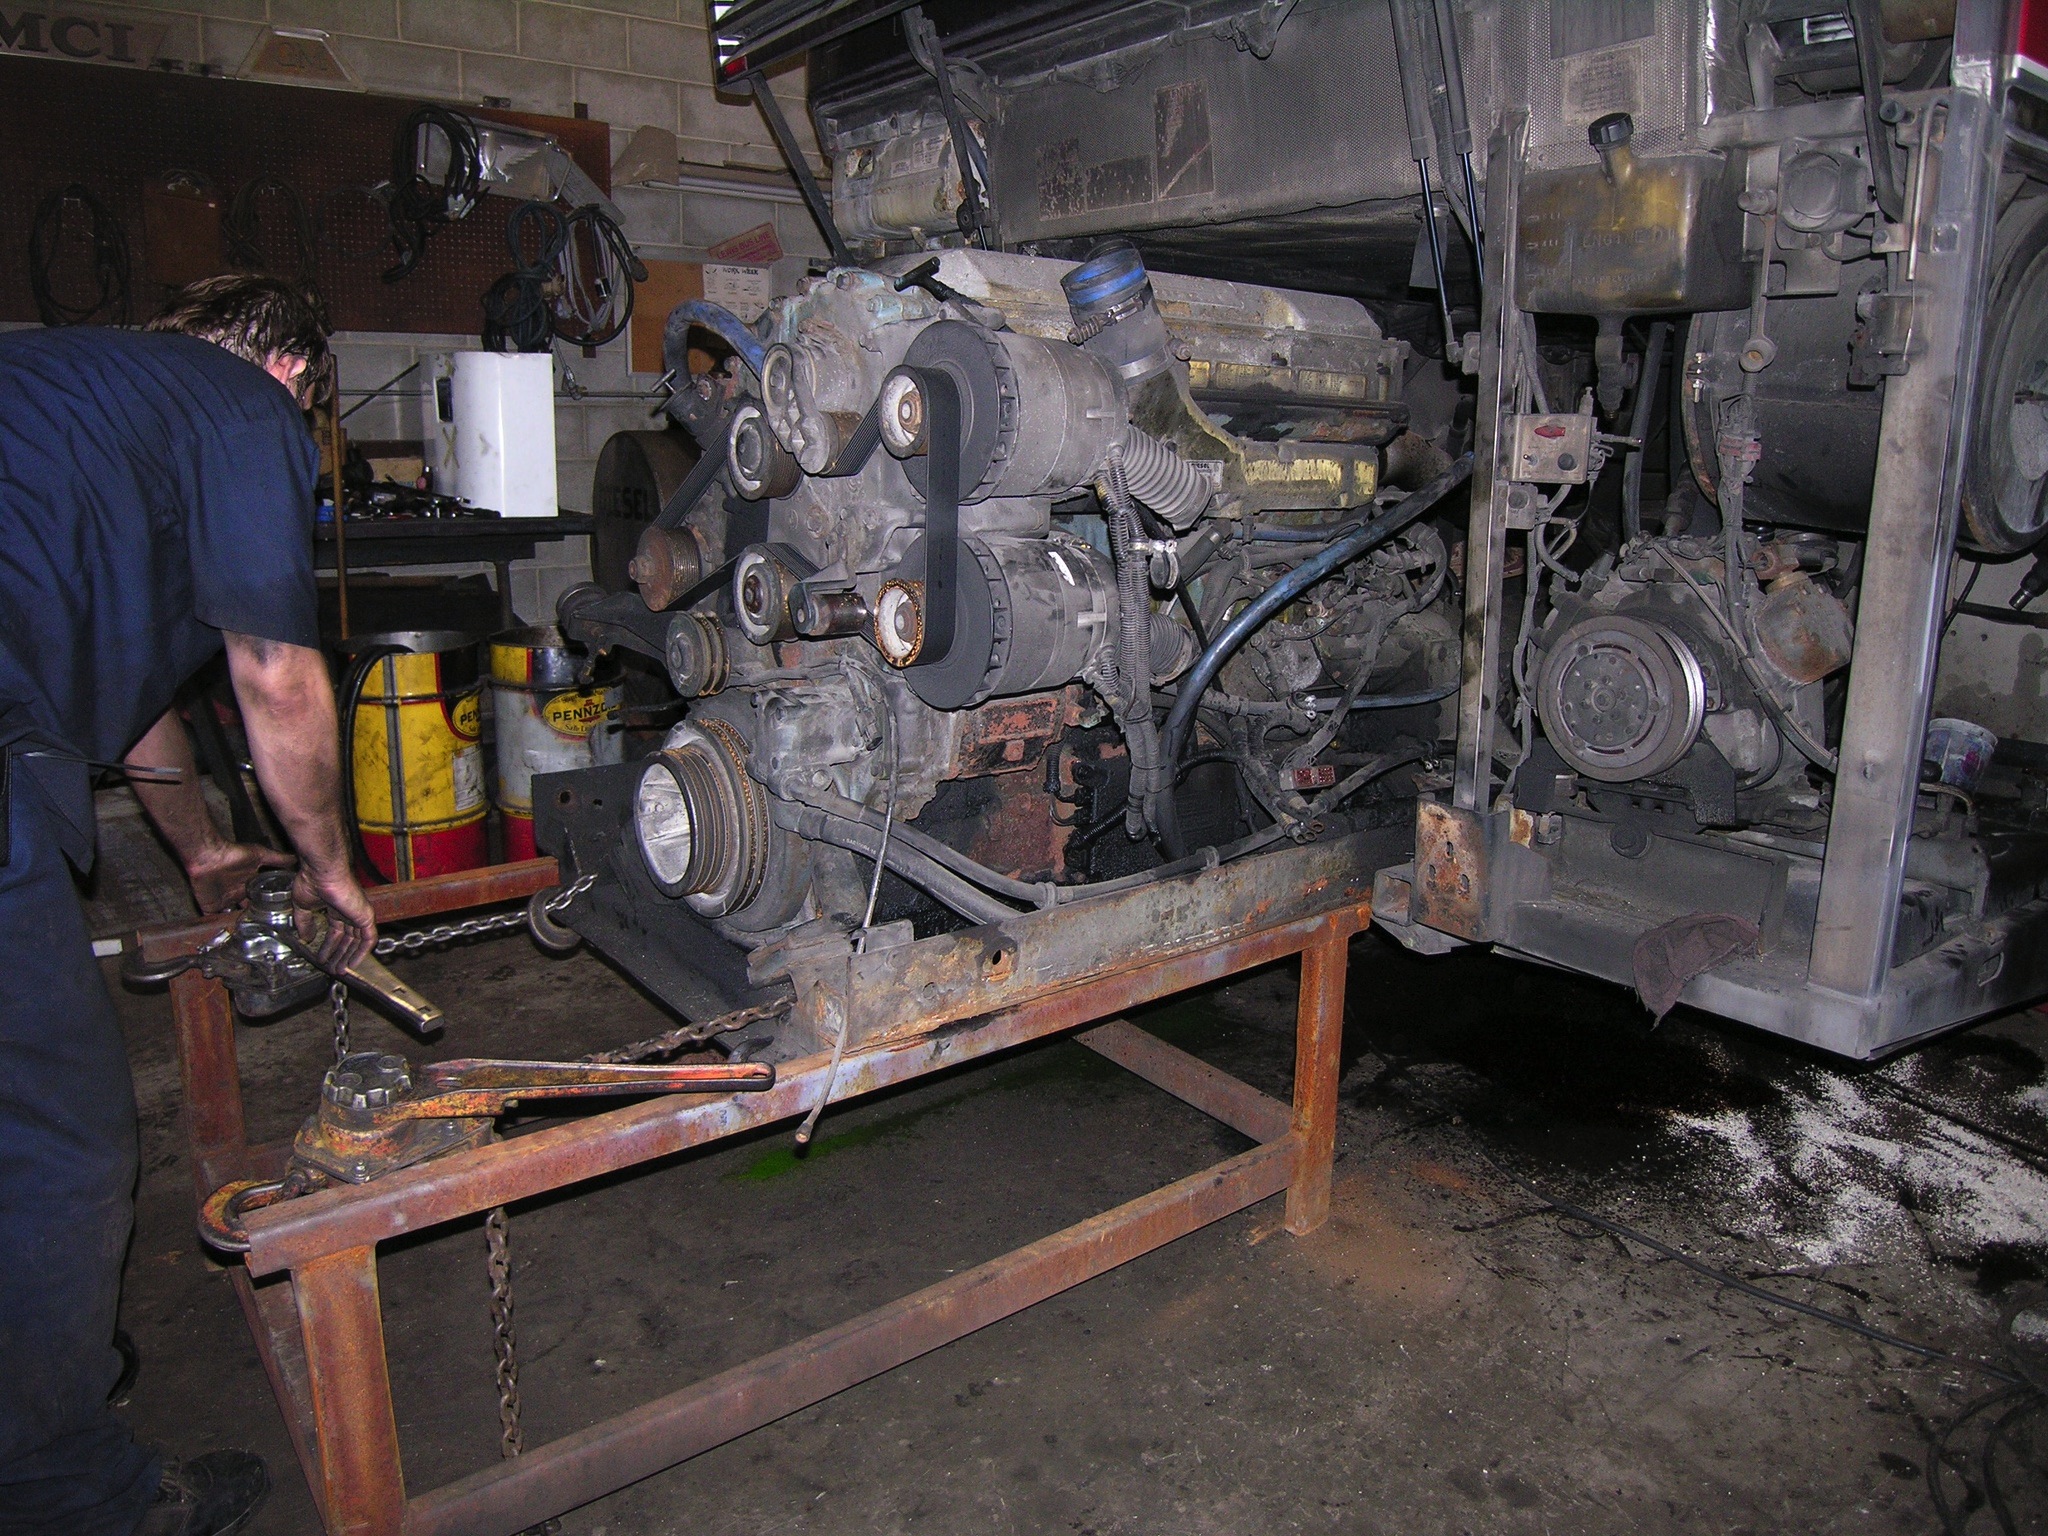 Repair bus engine